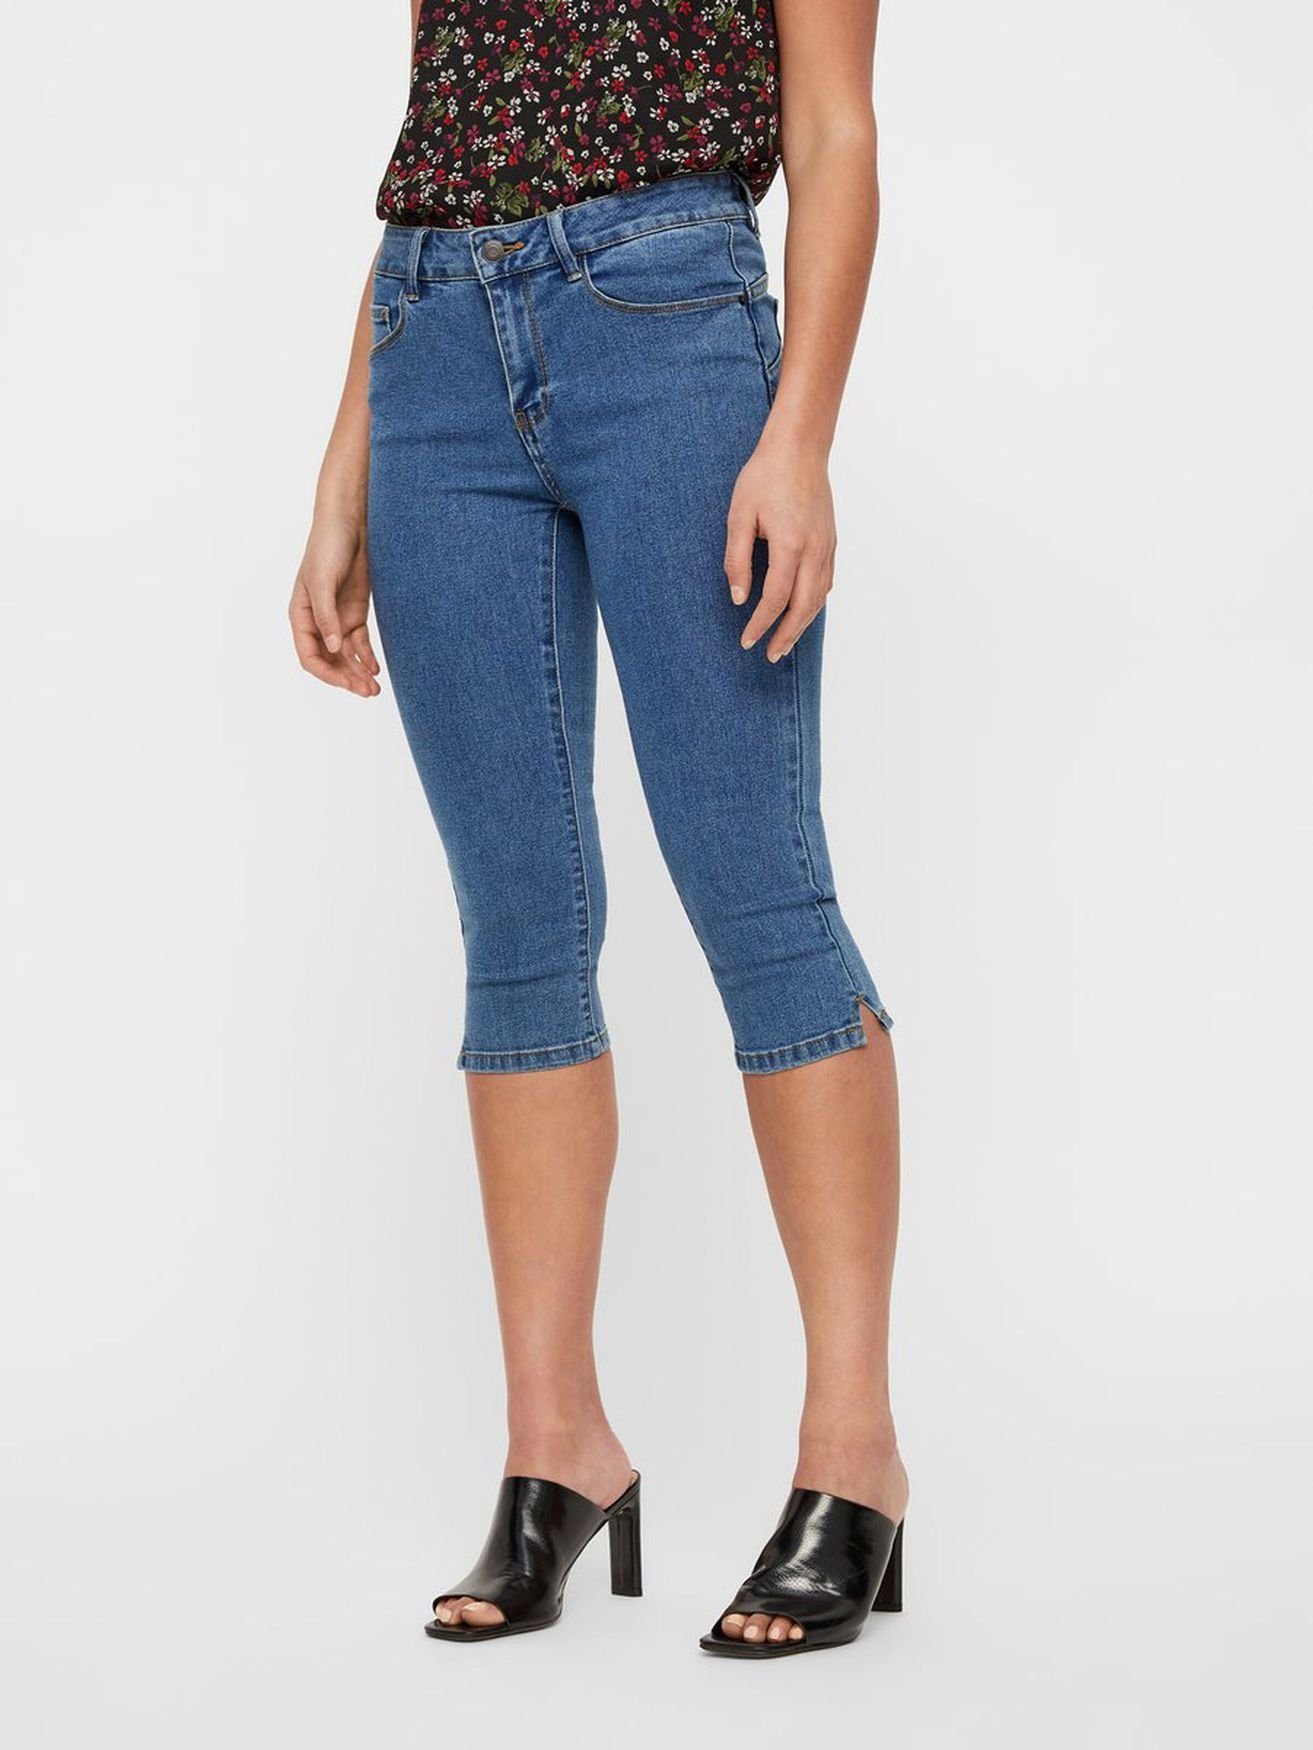 Vero Moda Caprihose »4101« (slim fit, 1-tlg., Reißverschluss) Denim Capri  Jeans Shorts Kurze Bermuda Sommer Stretch 3/4 Hose VMHOT online kaufen |  OTTO